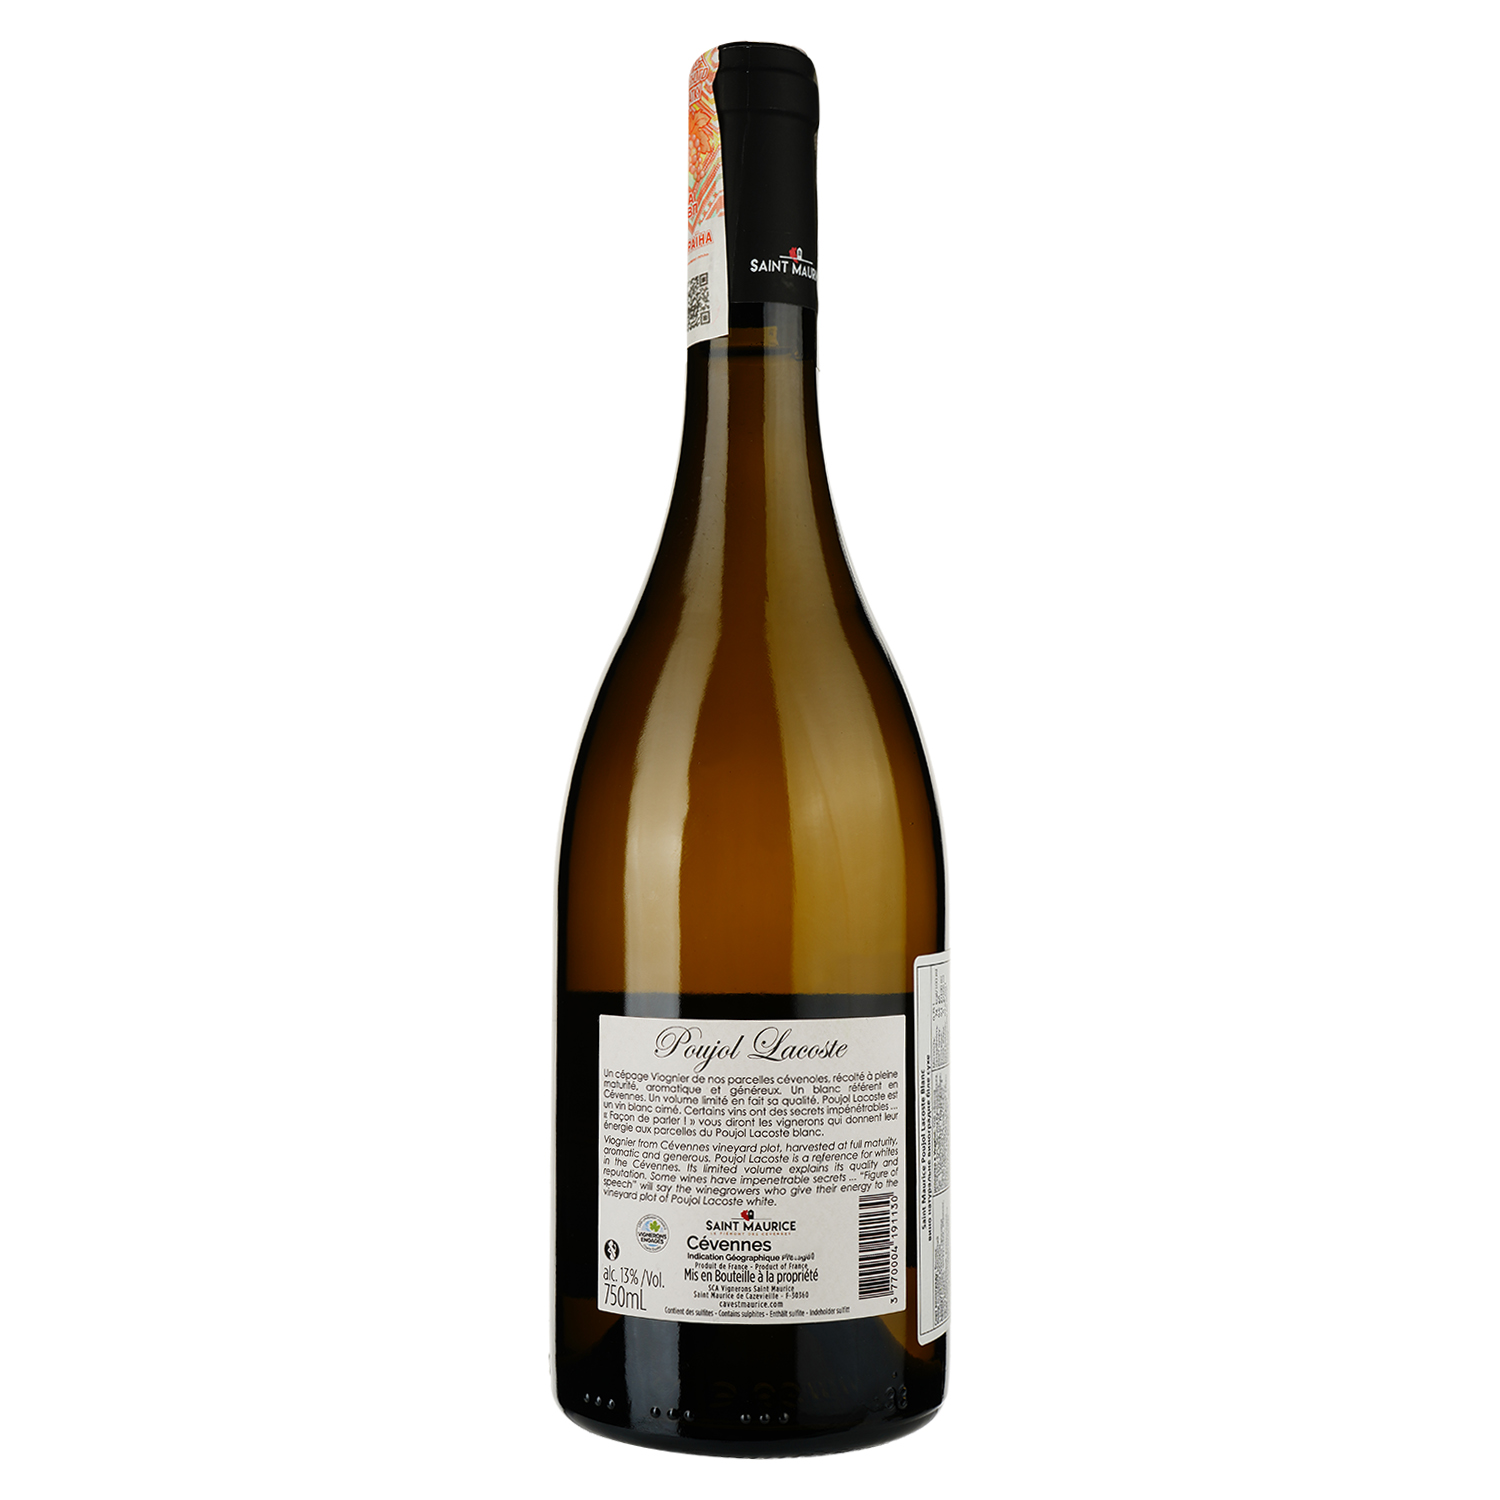 Вино Saint Maurice Poujol Lacoste IGP Cevennes blanc, vegan, біле сухе, 0,75 л - фото 2